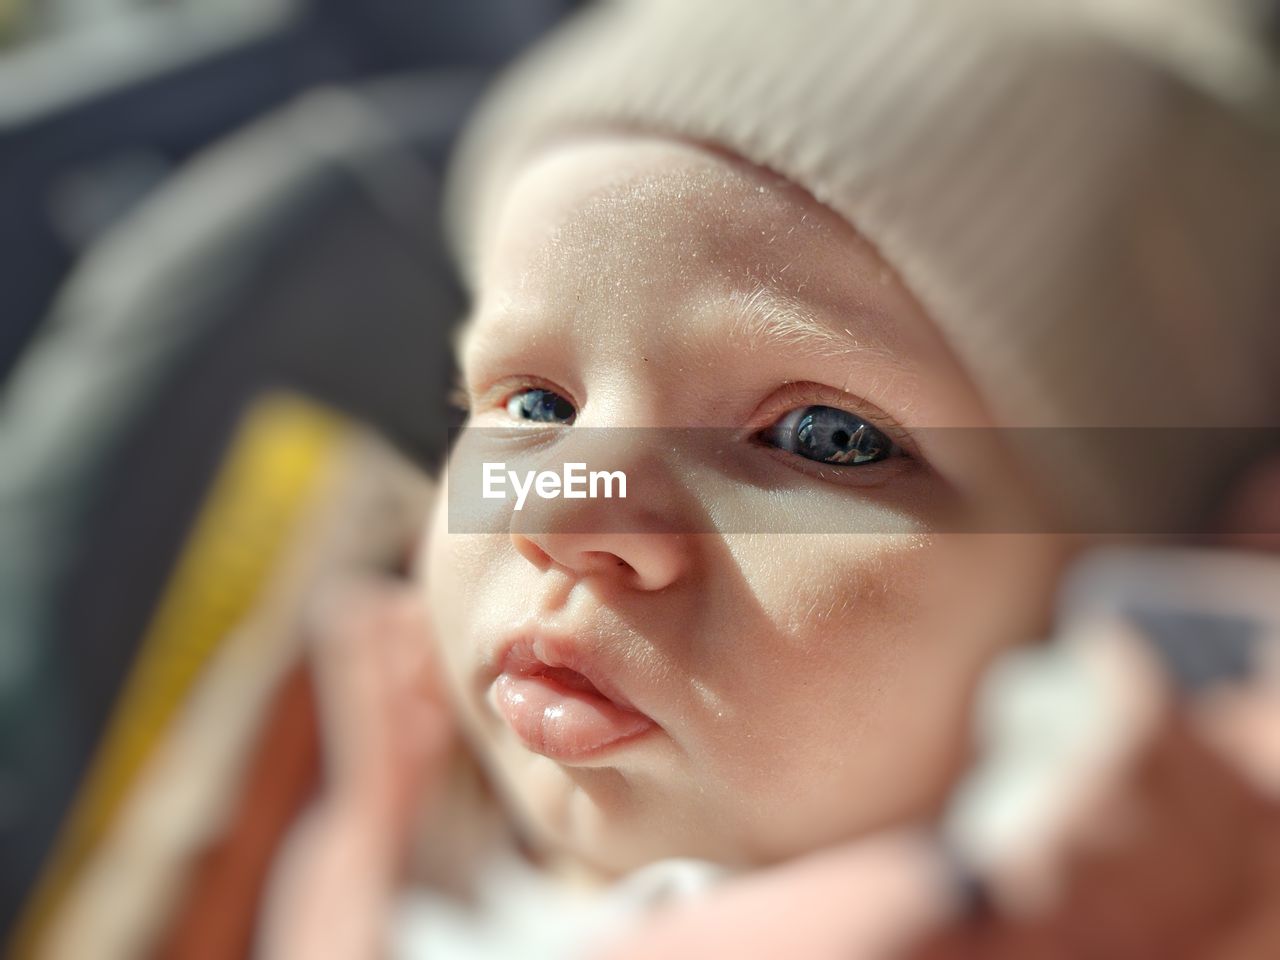 Babygirl eyes